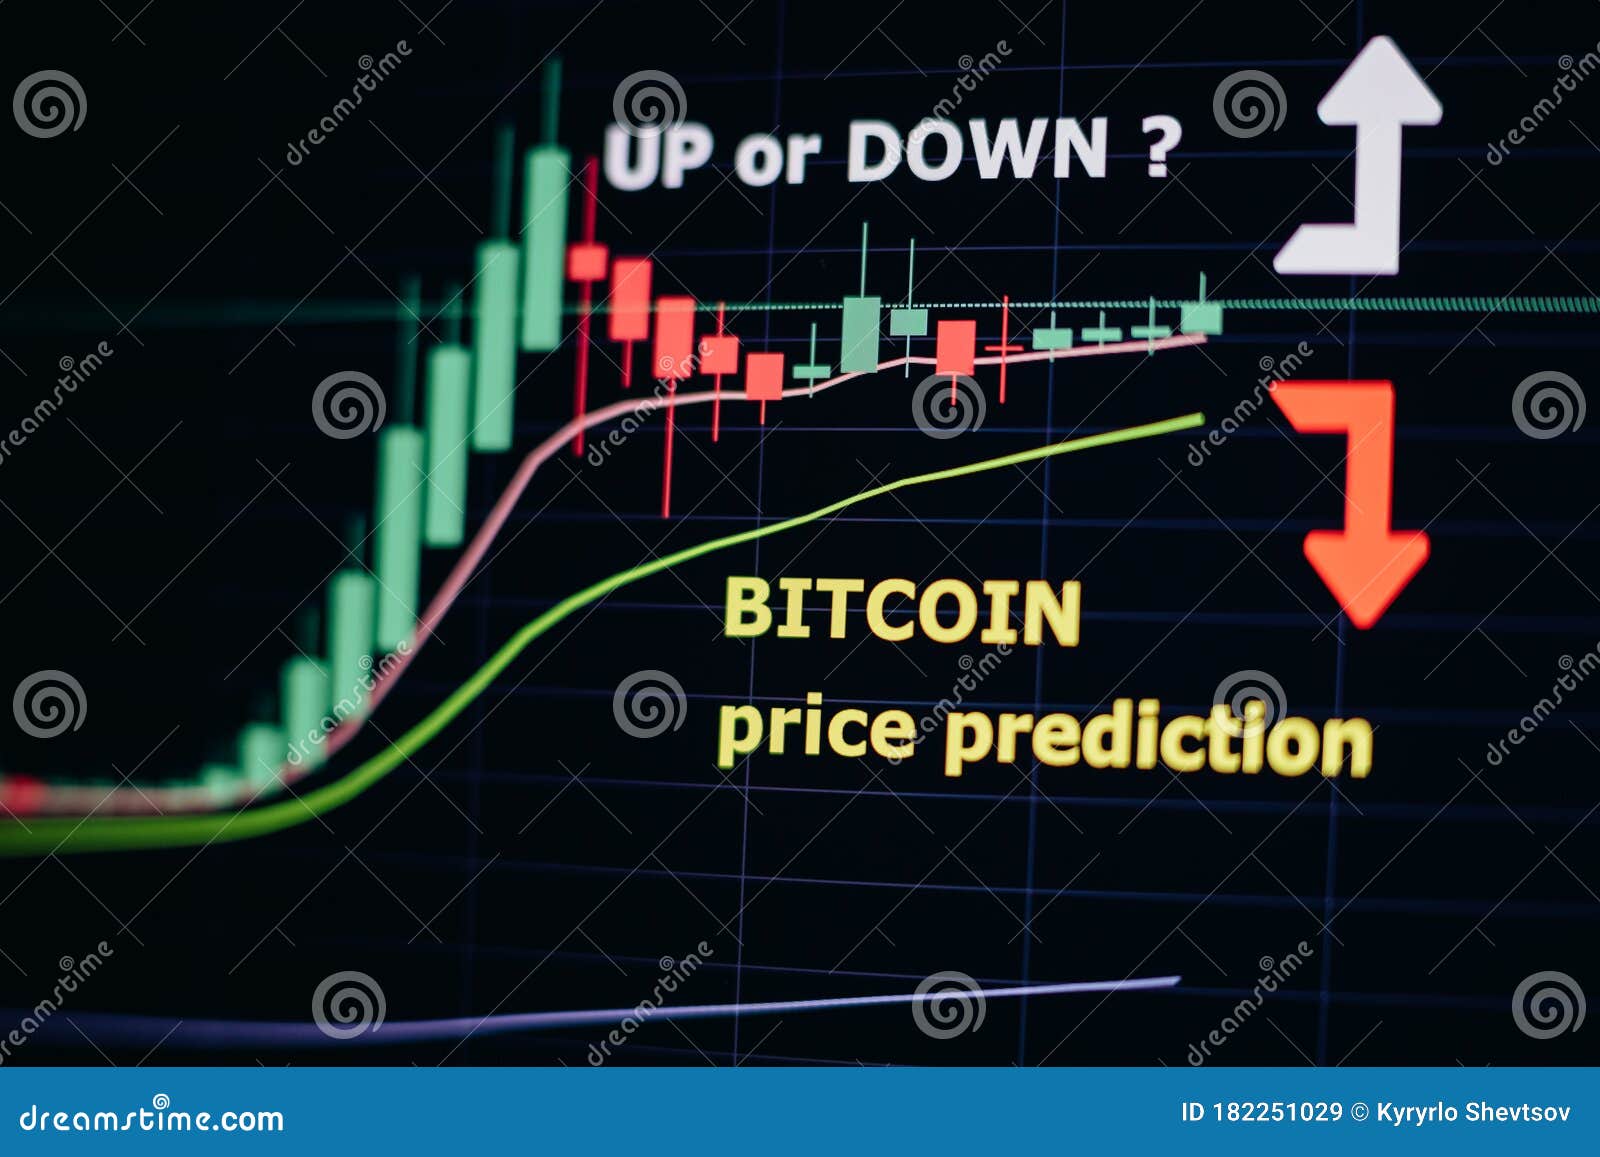 bitcoin price online